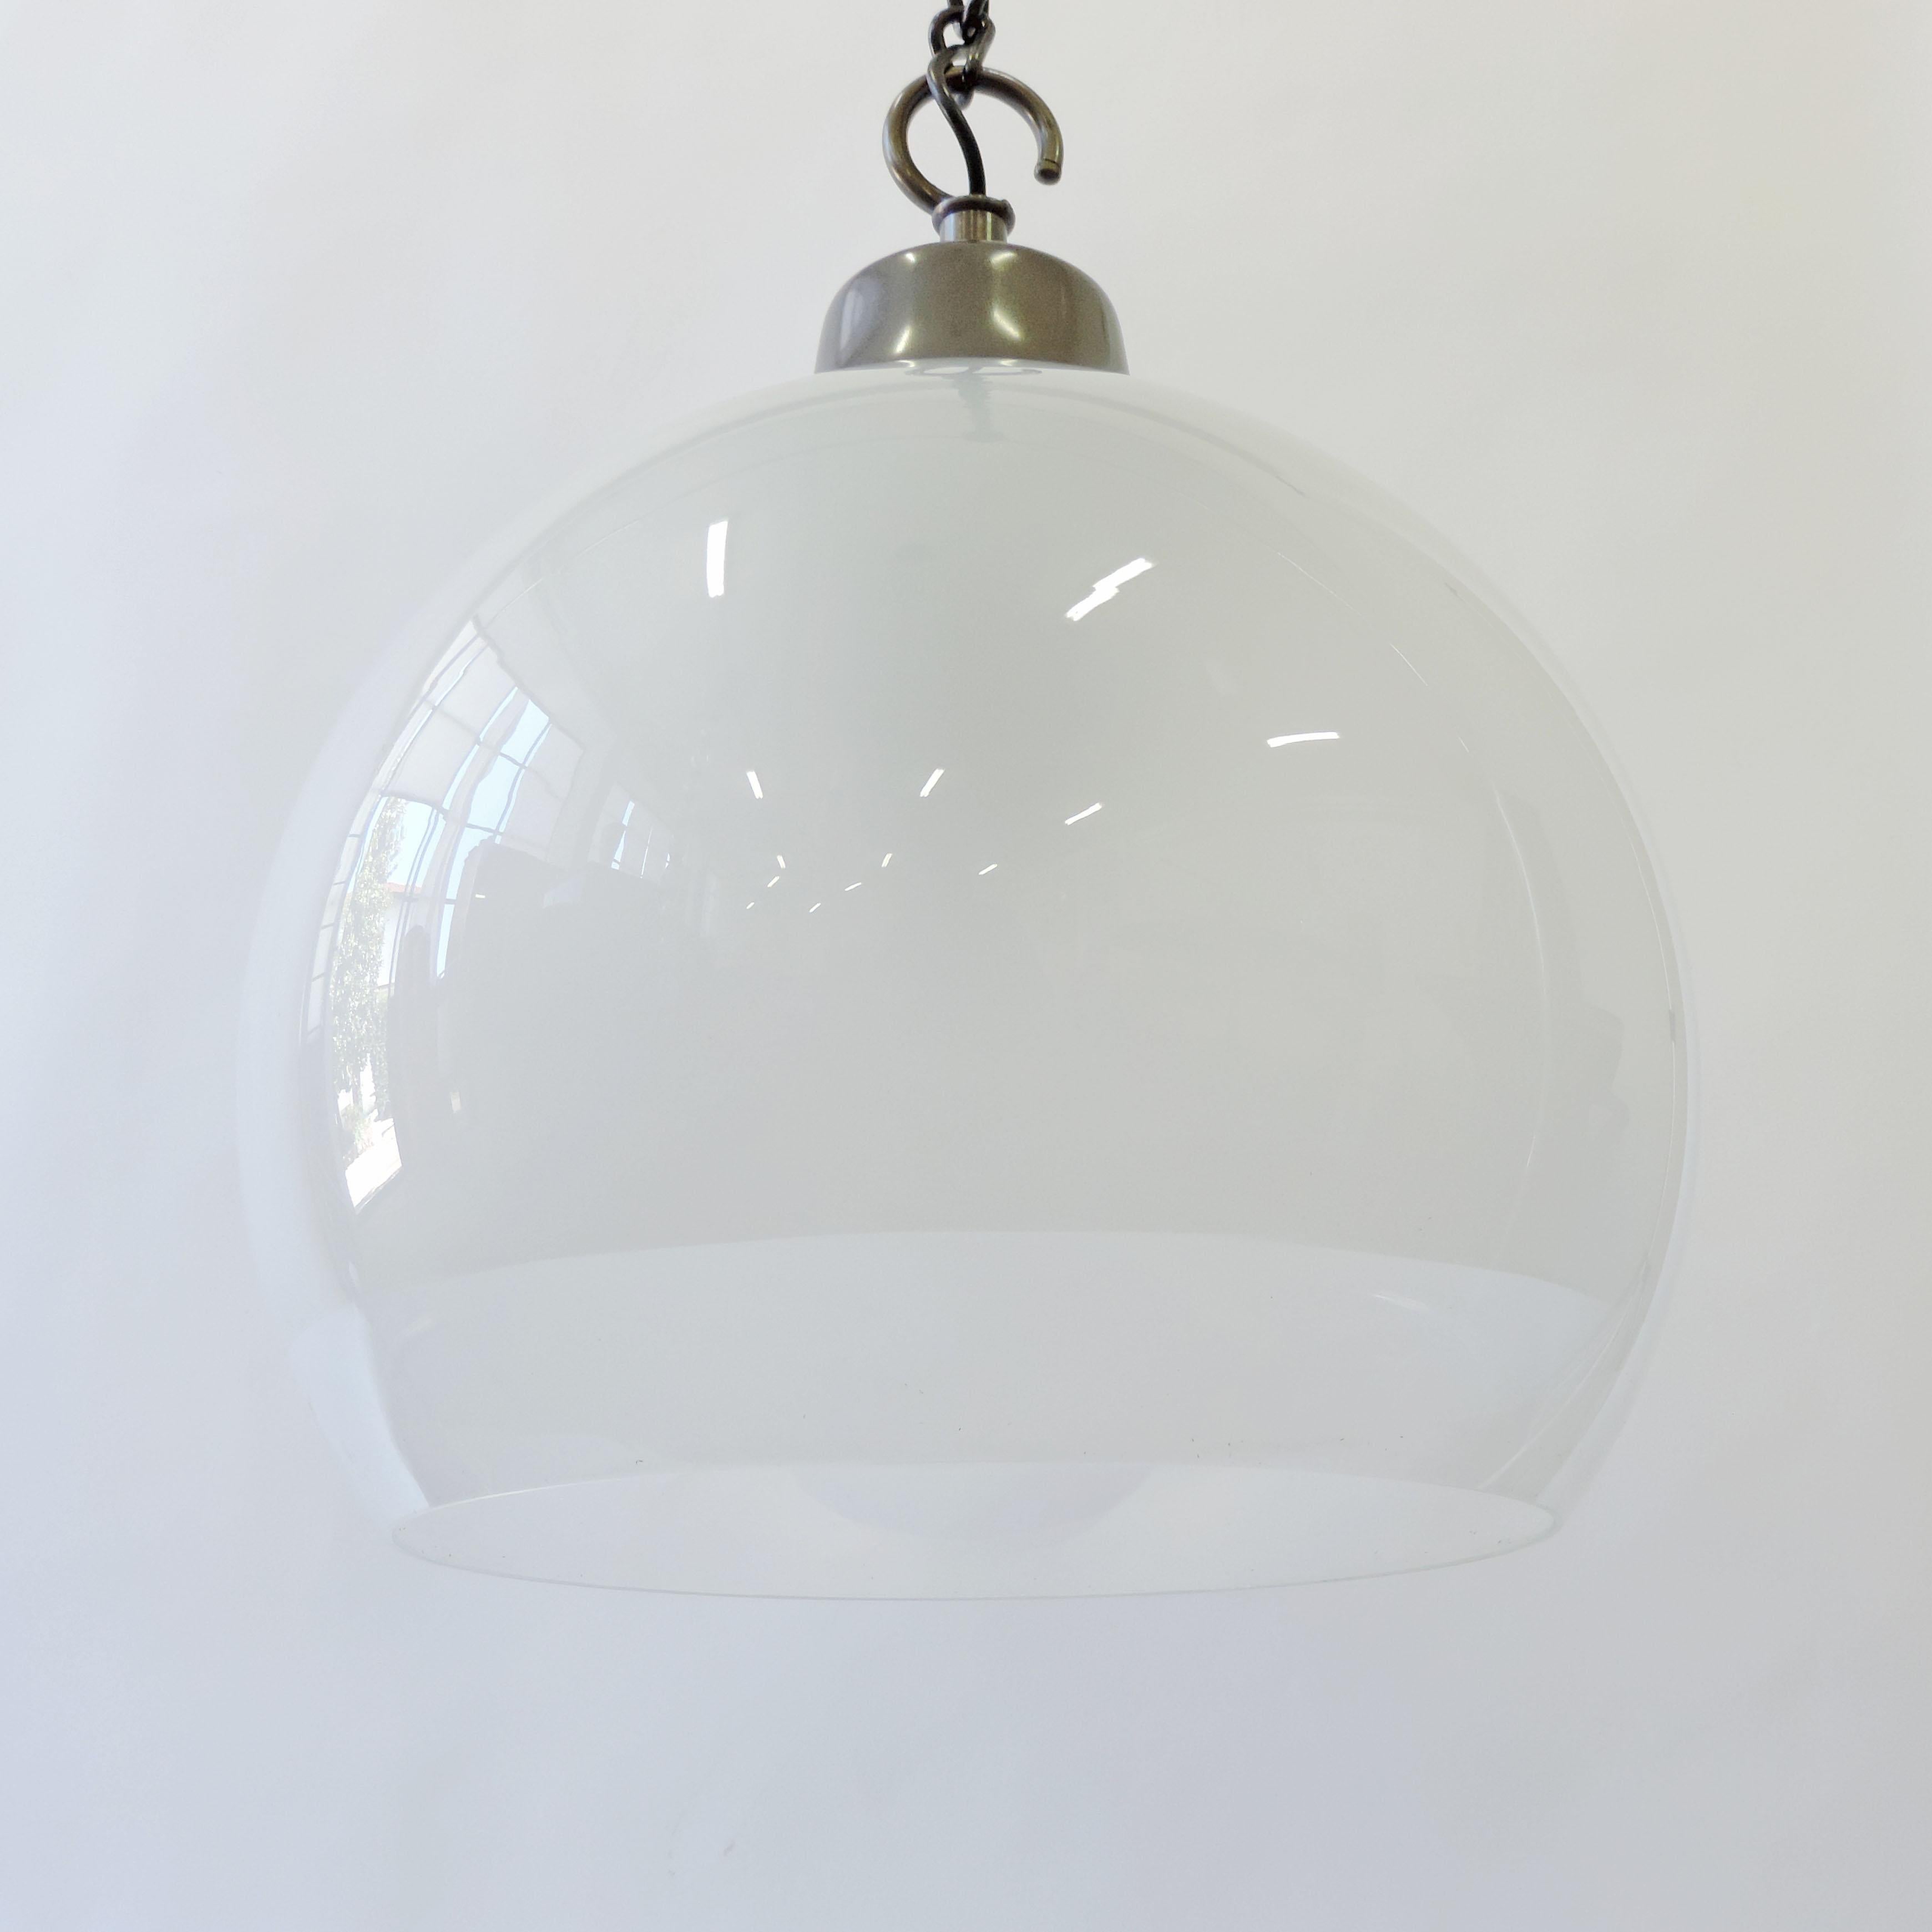 Italian Luigi Caccia Dominioni LS10 Ceiling Lamp for Azucena, Italy, 1960s